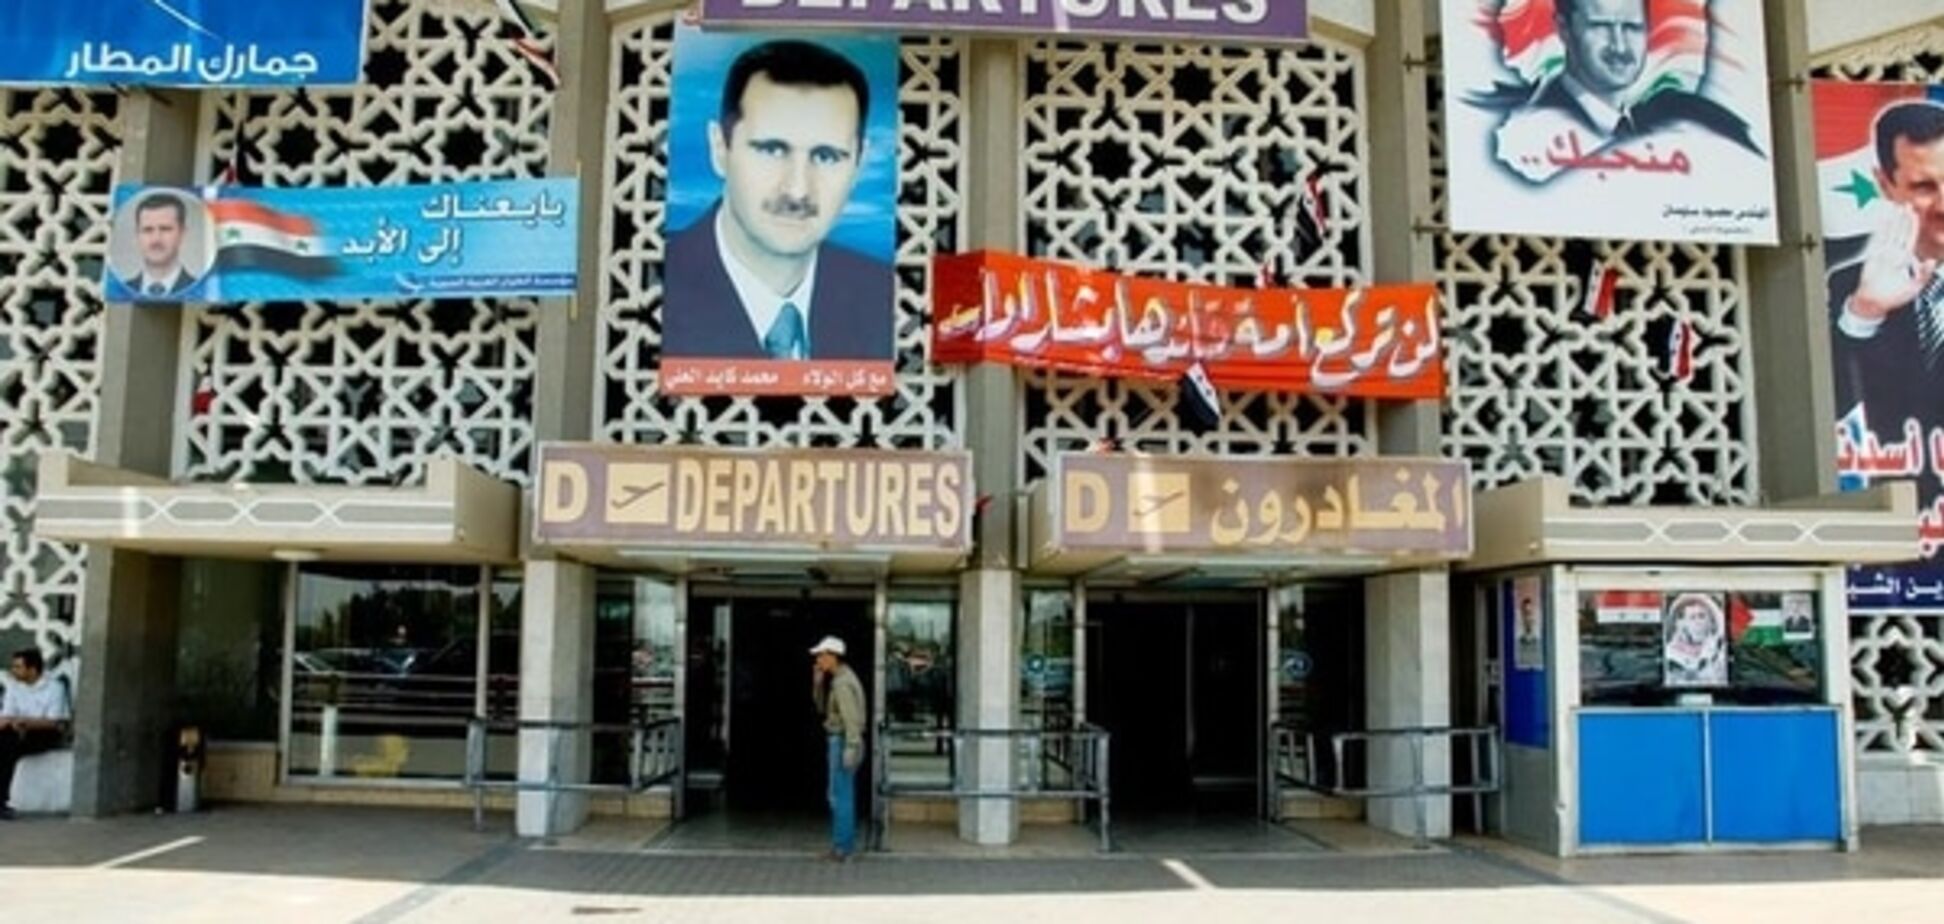 Израиль атаковал аэропорт Башара Асада в Дамаске - СМИ